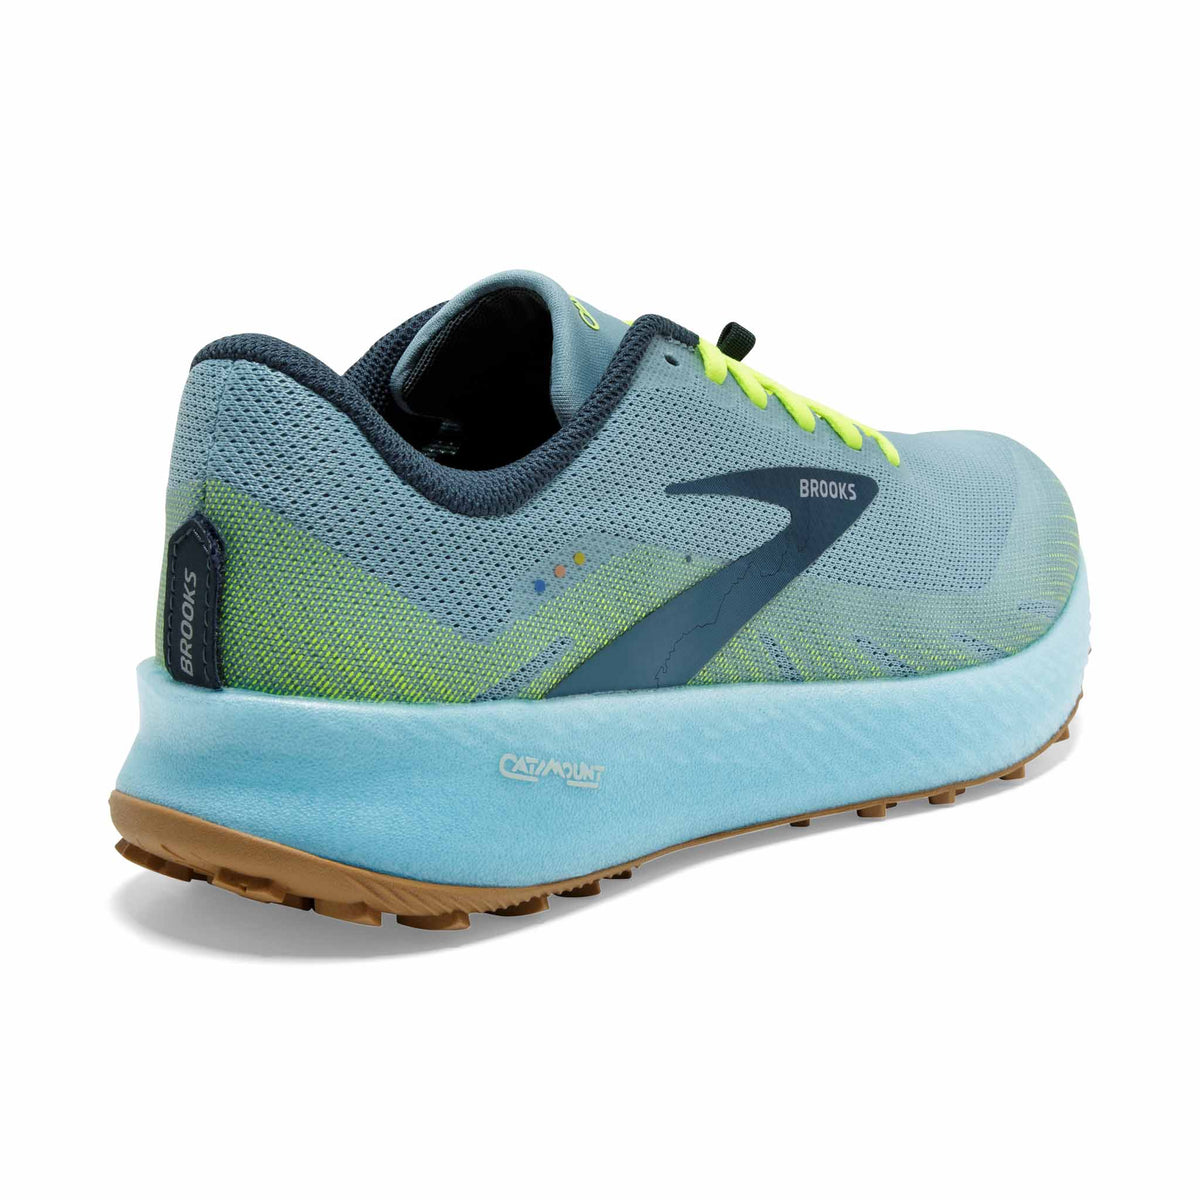 Brooks Catamount chaussures de course à pied trail femme - Blue / Lime / Biscuit - angle 2